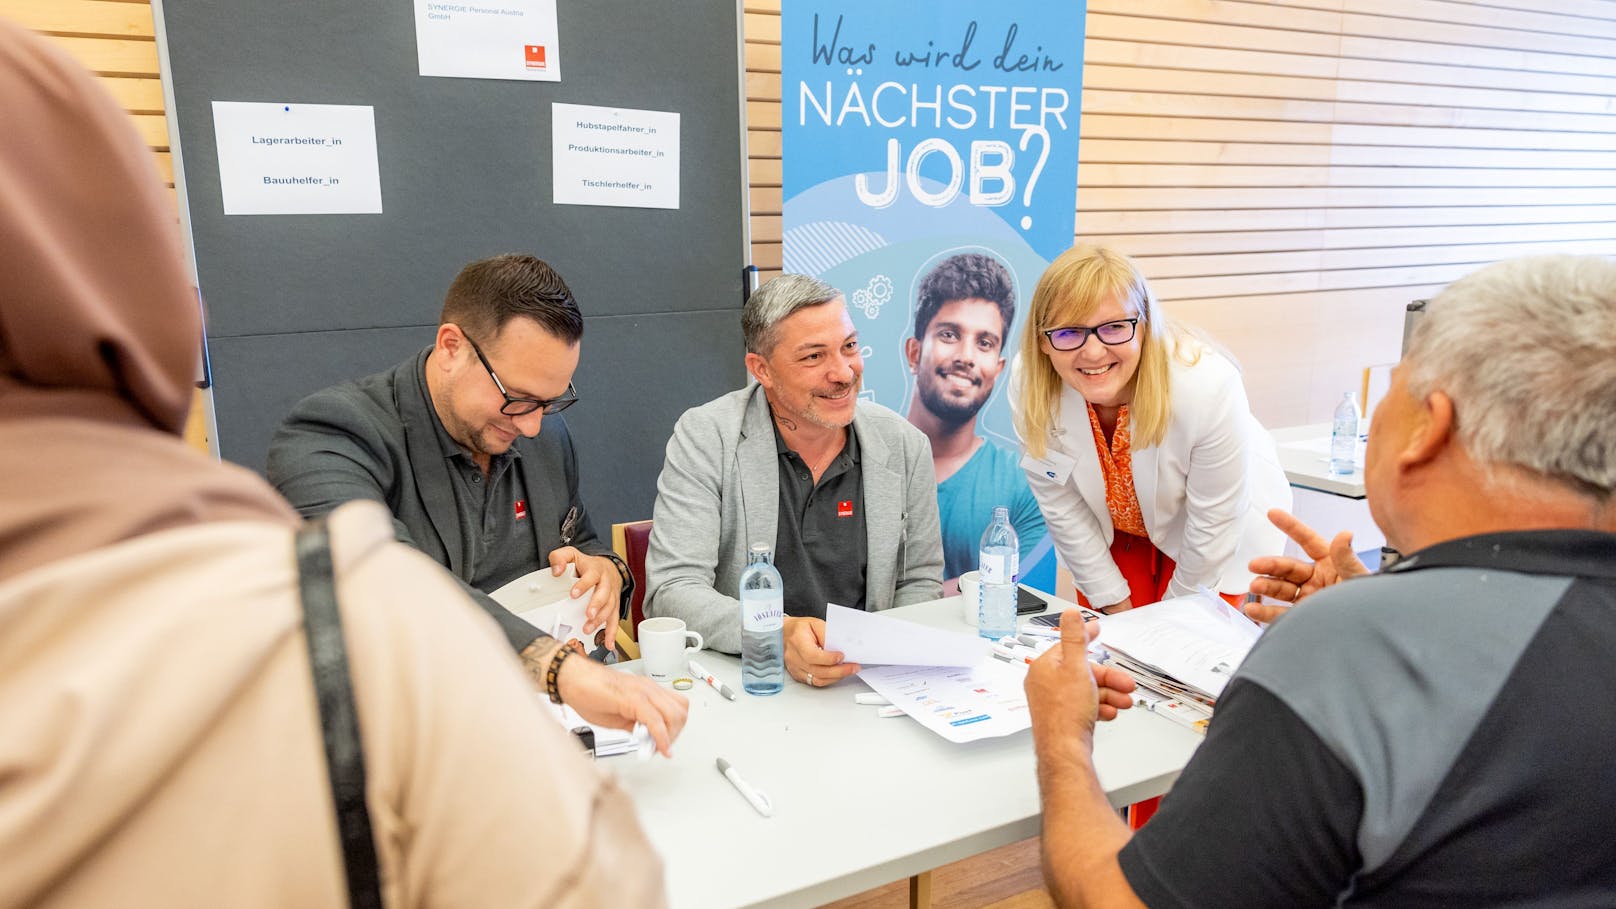 Deutschkurse, Messen – so will AMS Flüchtlingen helfen